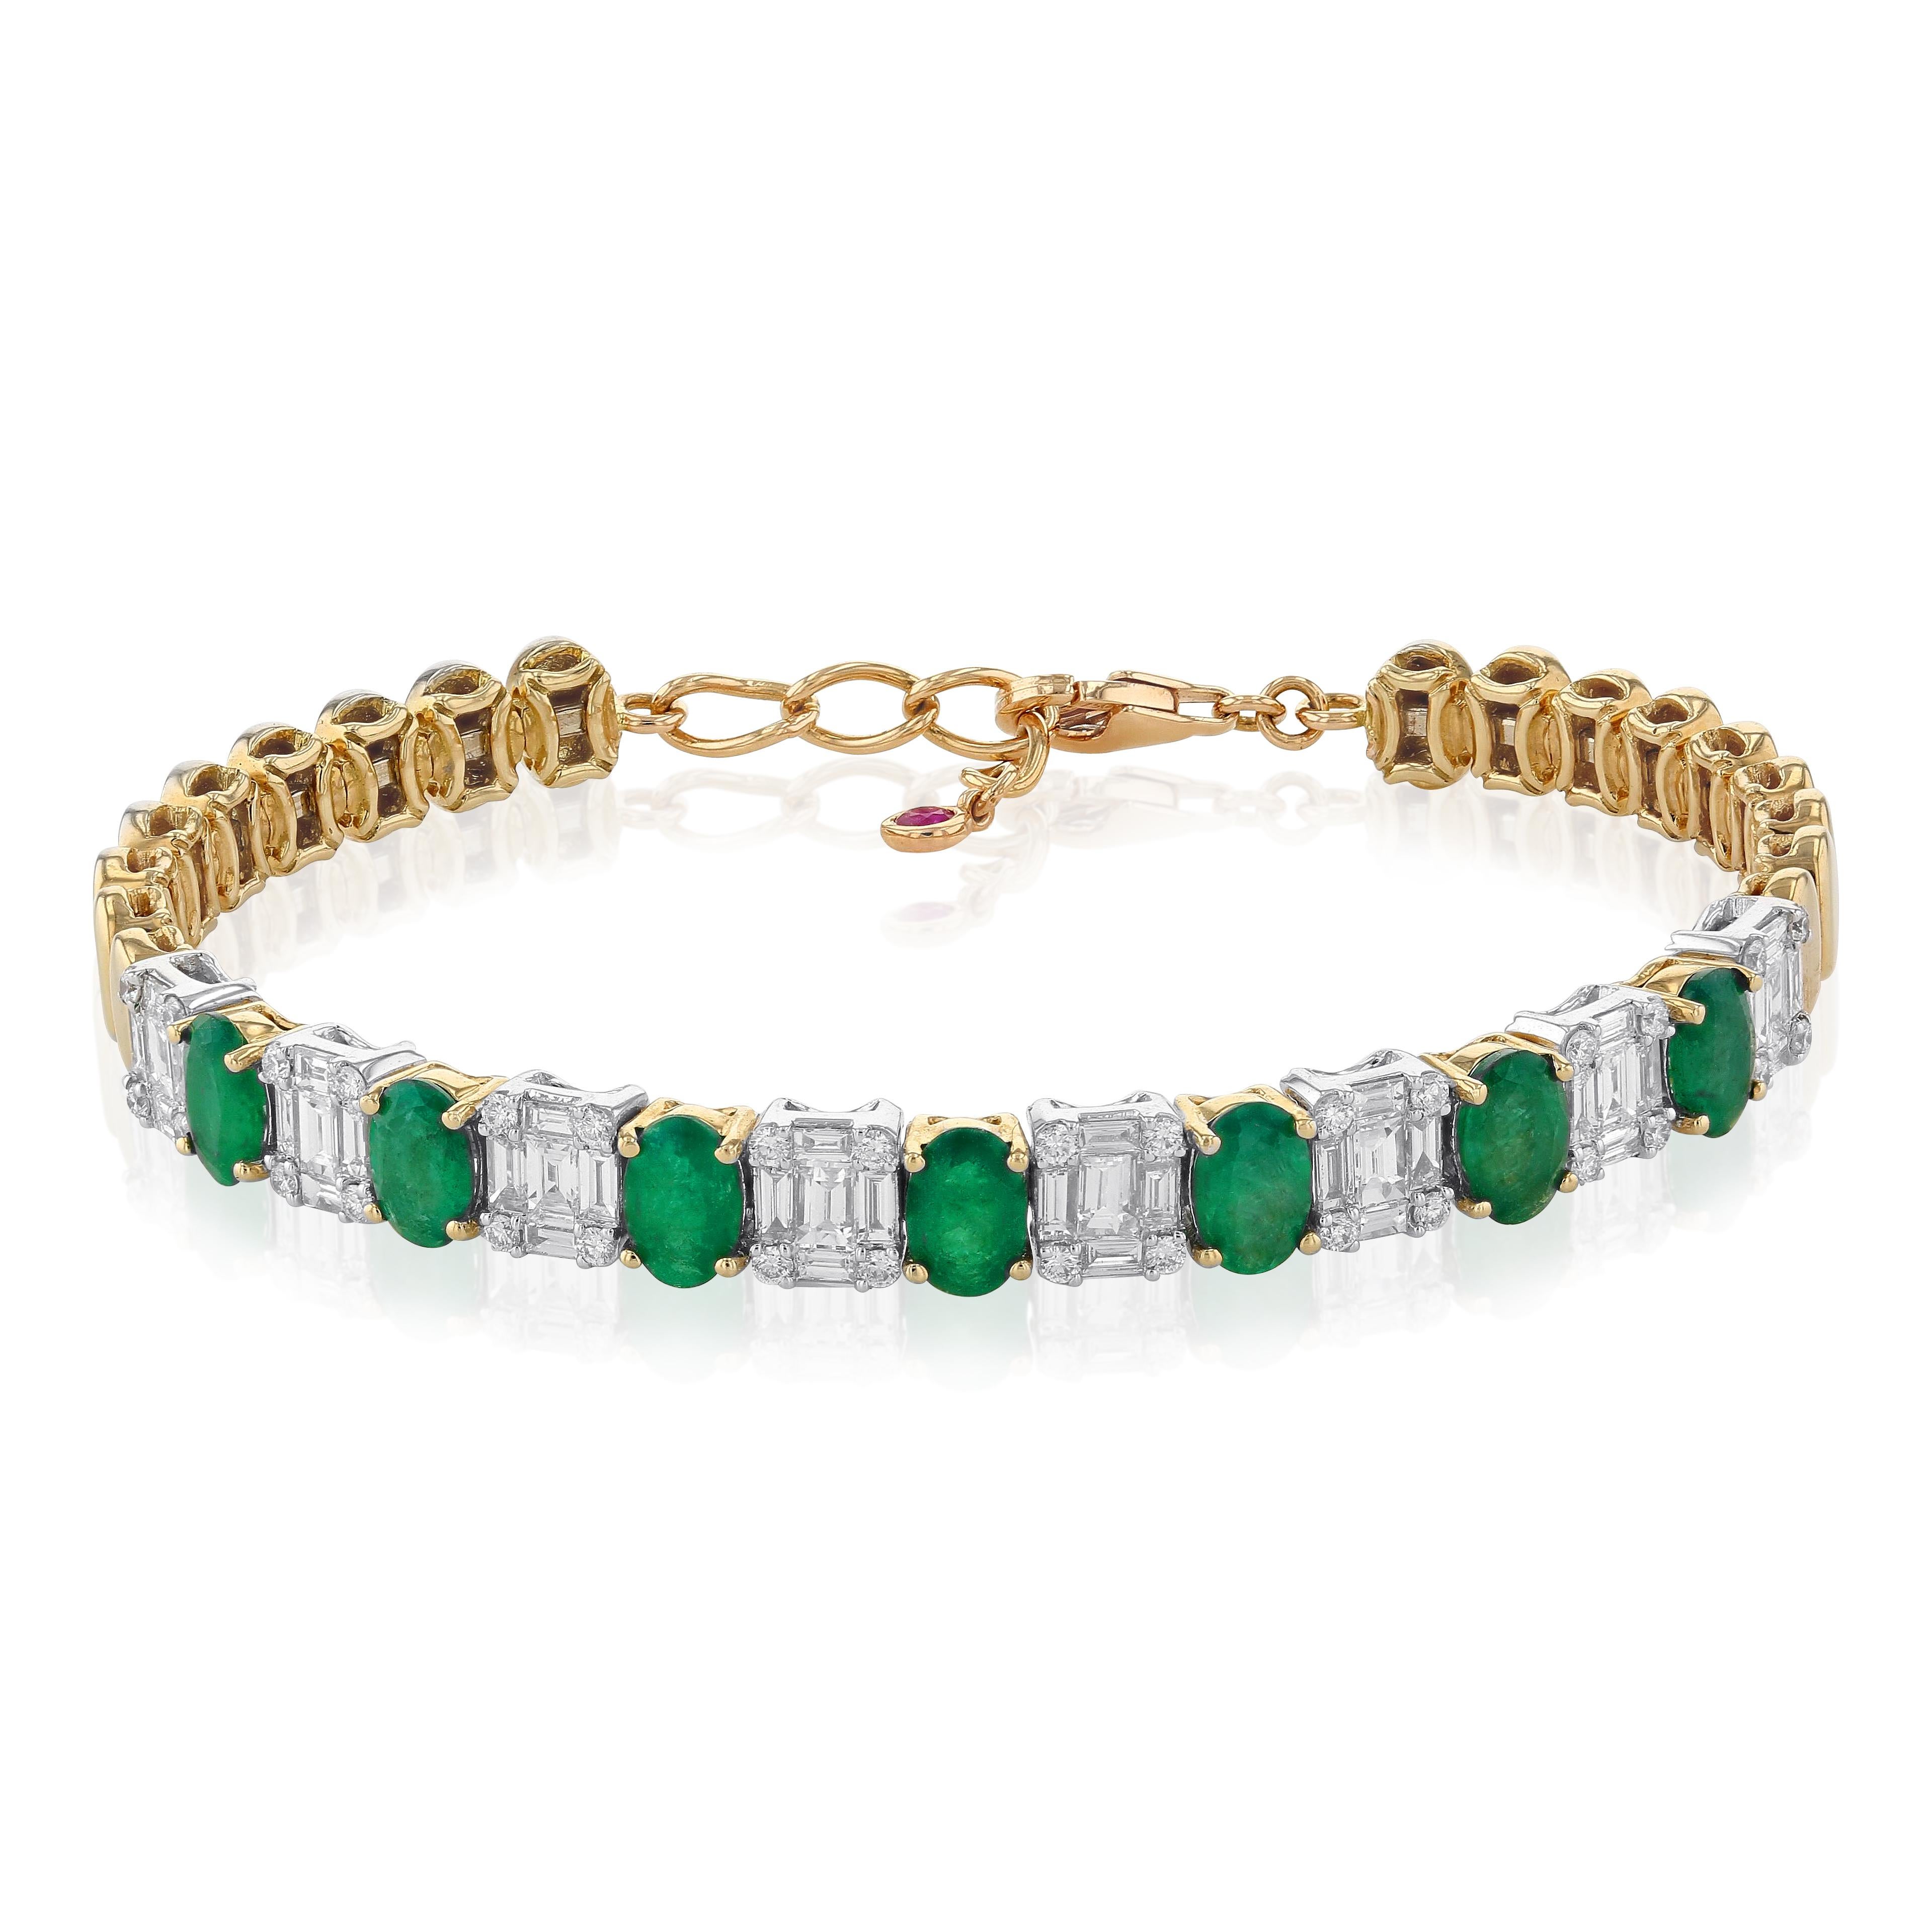 Amwaj Jewelry Emerald Cut Bangle in 18 Karat Gold In New Condition For Sale In Abu Dhabi, Abu Dhabi